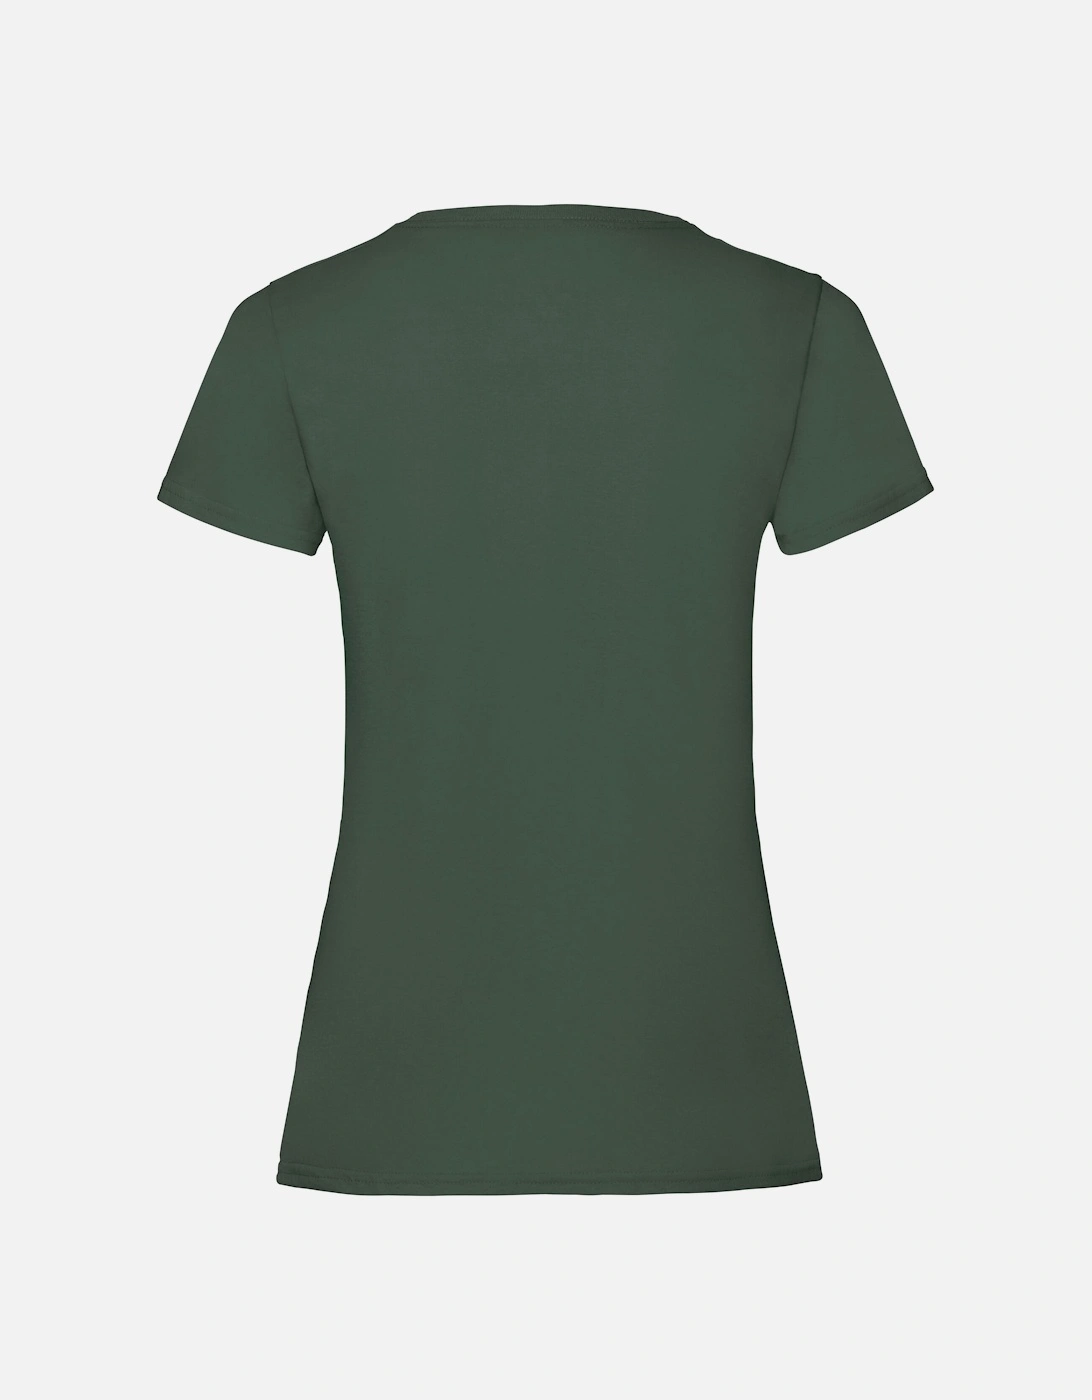 Womens/Ladies Lady Fit T-Shirt